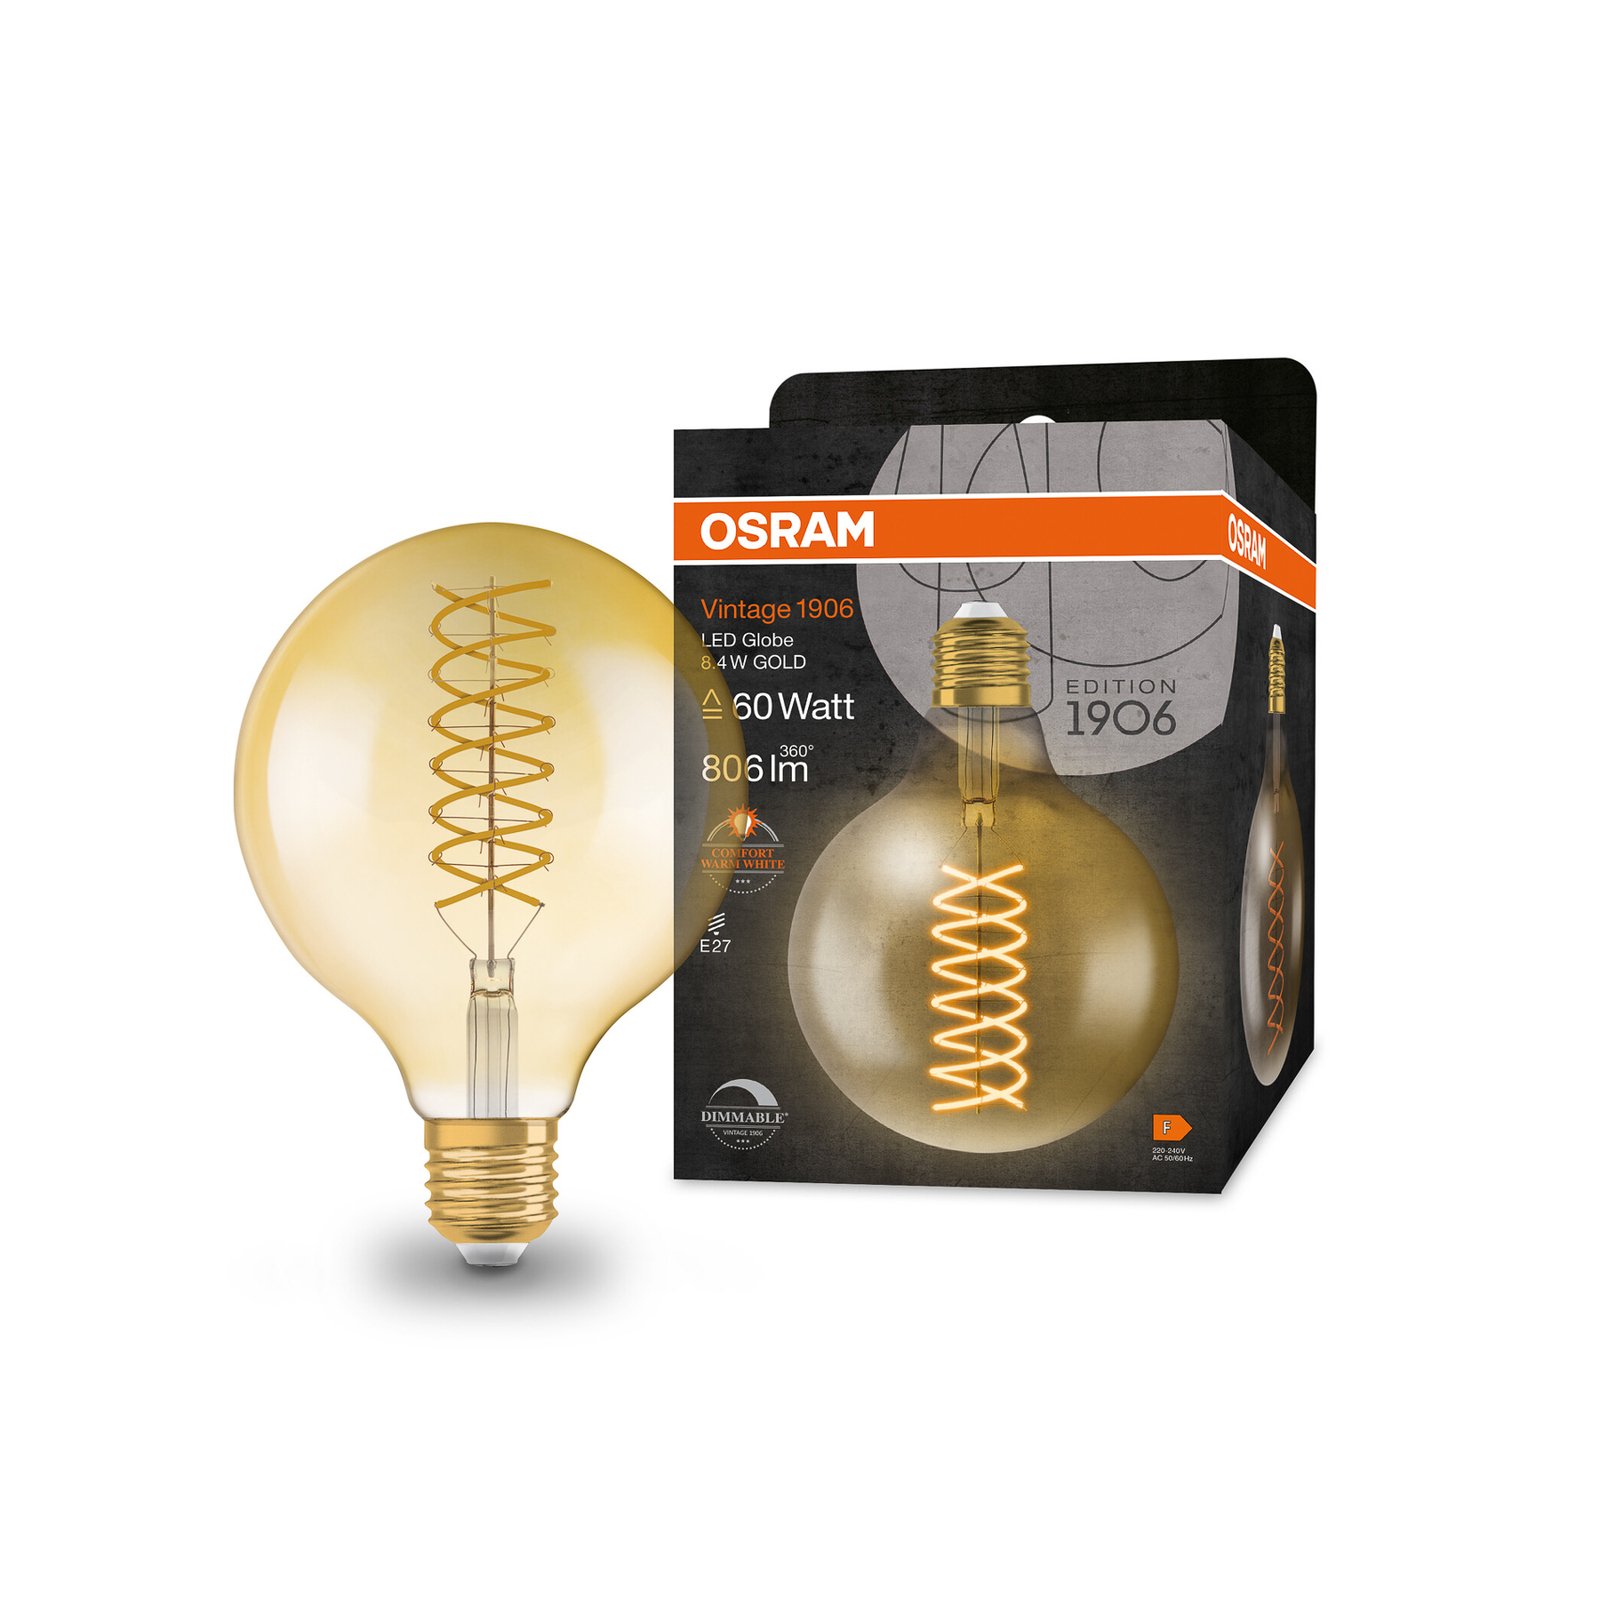 OSRAM LED Vintage 1906, G125, E27, 8,4 W, goud, 824, dimbaar.